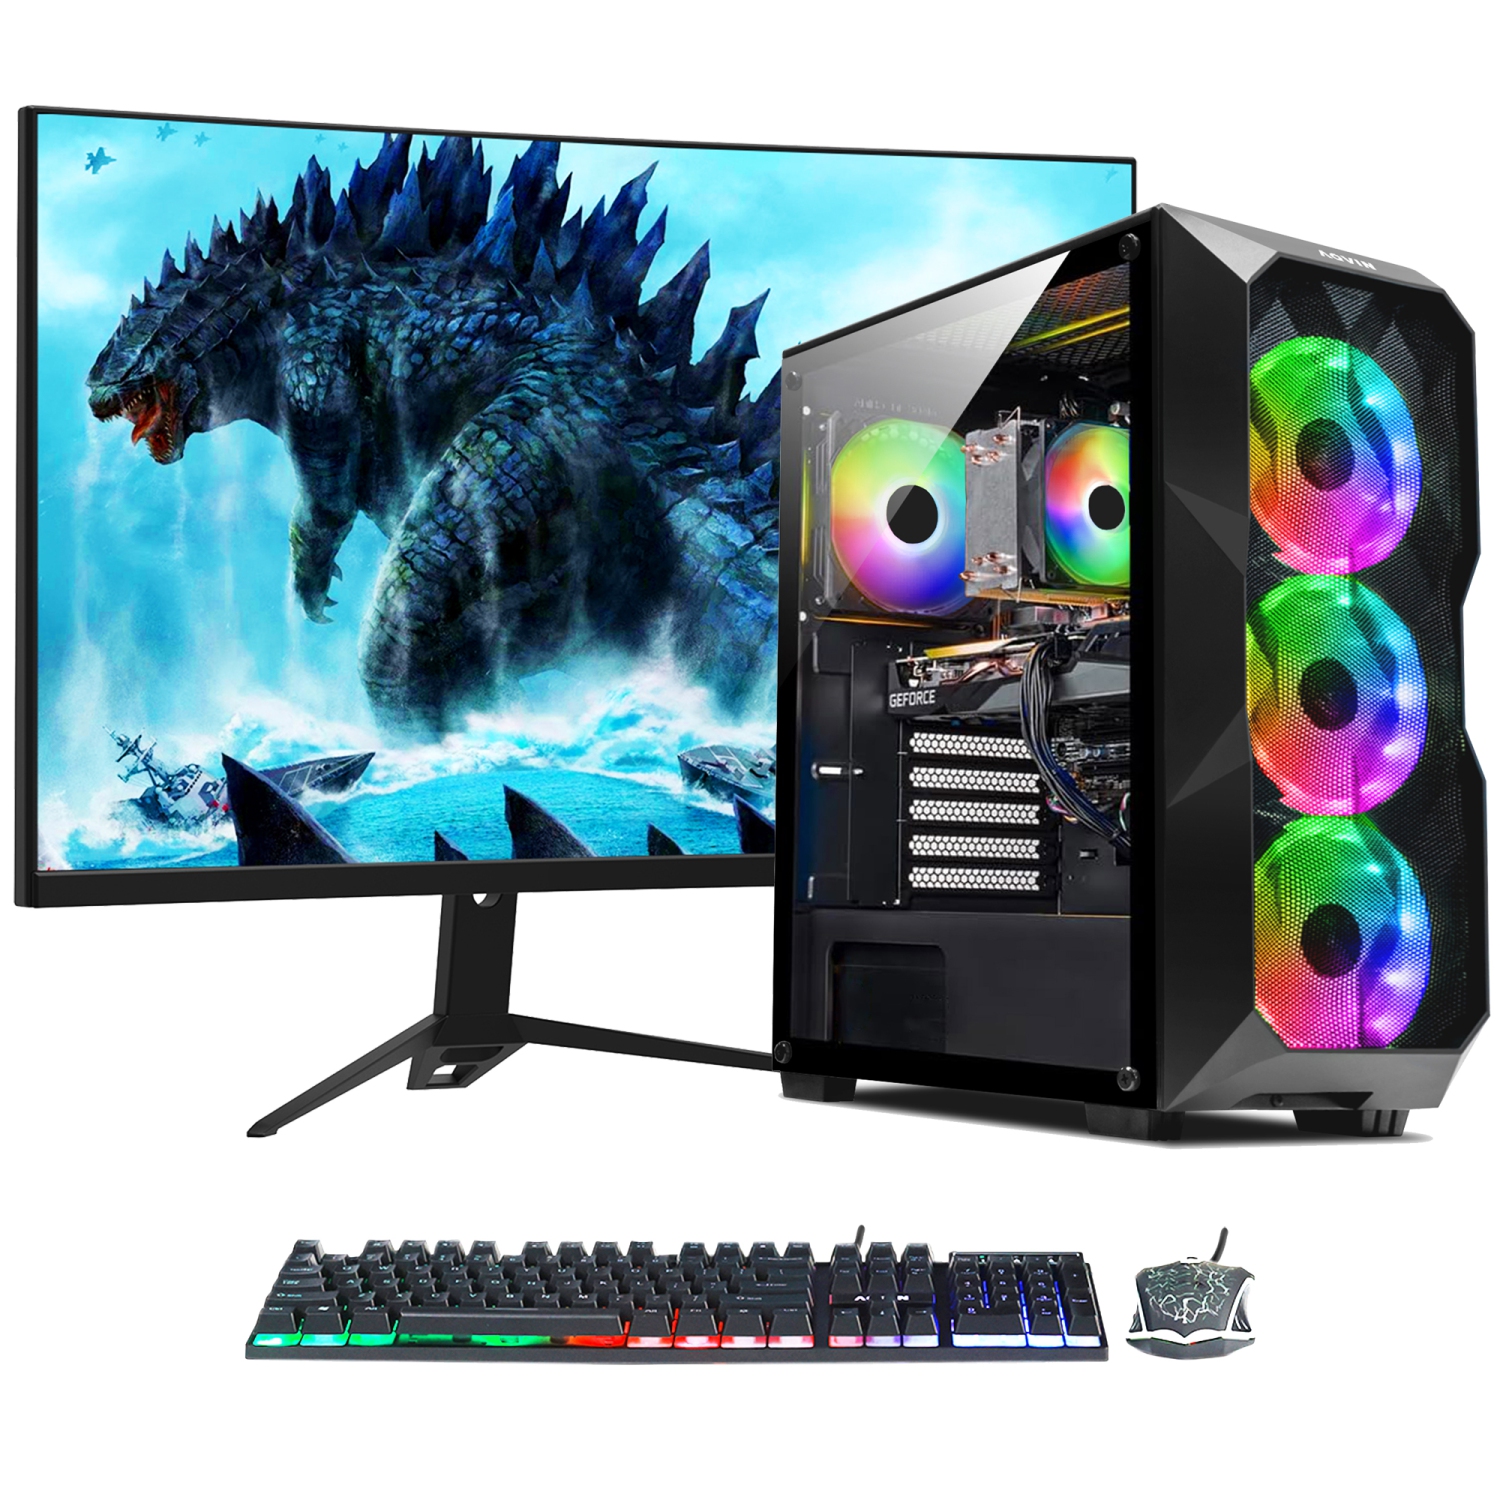 Gaming PC AQVIN AQB70 Desktop Computer Tower| New 27-inch Curved Gaming Monitor| Intel Core i7 CPU upto 4.00GHz| 32GB RAM| 2TB SSD| GeForce RTX 3050 GPU| Windows 10 Pro| WIFI Ready